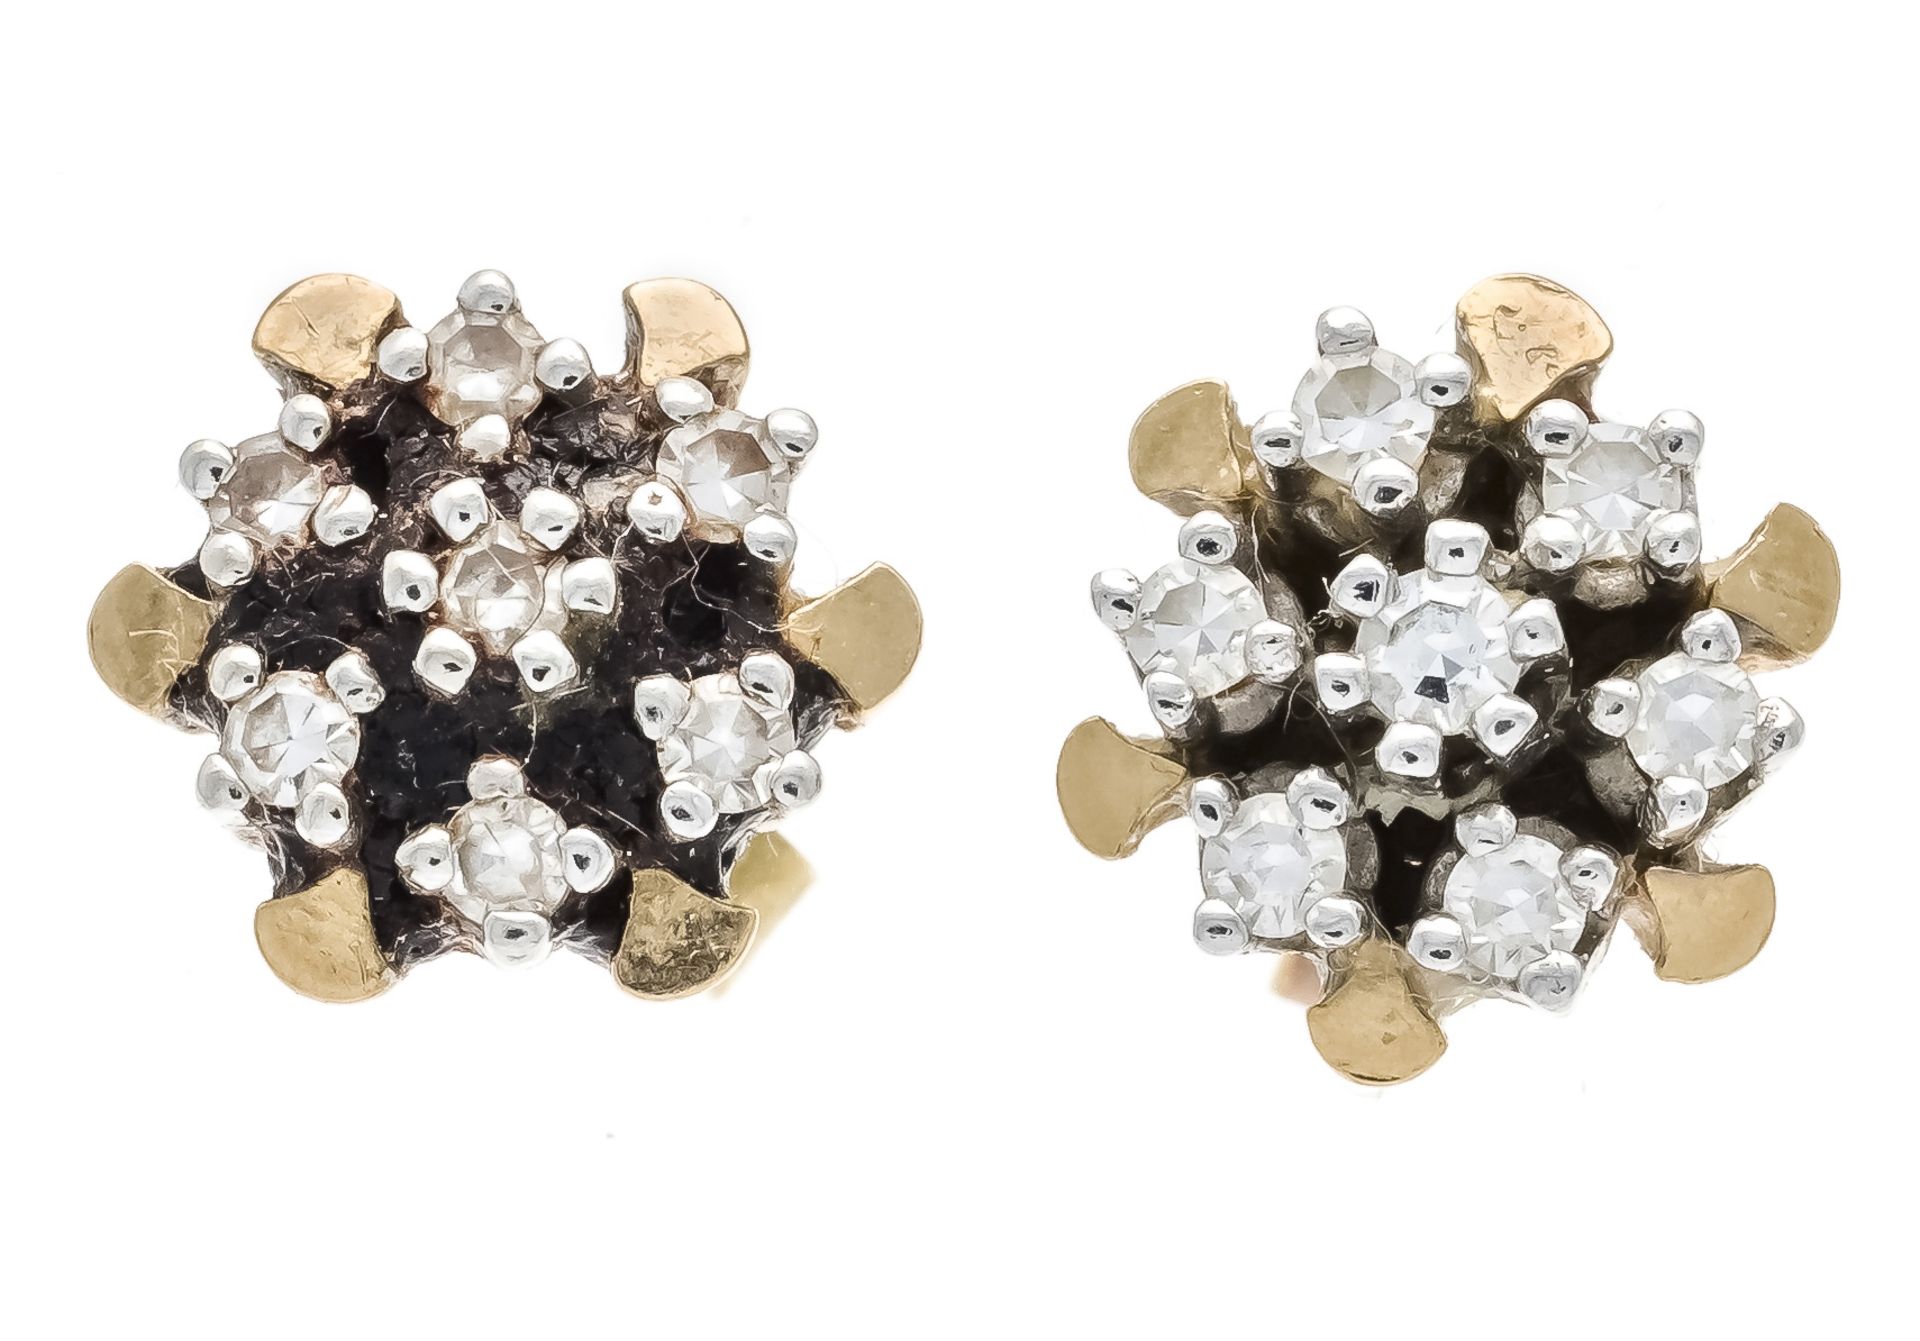 Diamond stud earrings GG/WG 585/000 with 14 octagonal diamonds, total 0.10 ct l.tintedW/SI, d. 9 mm,